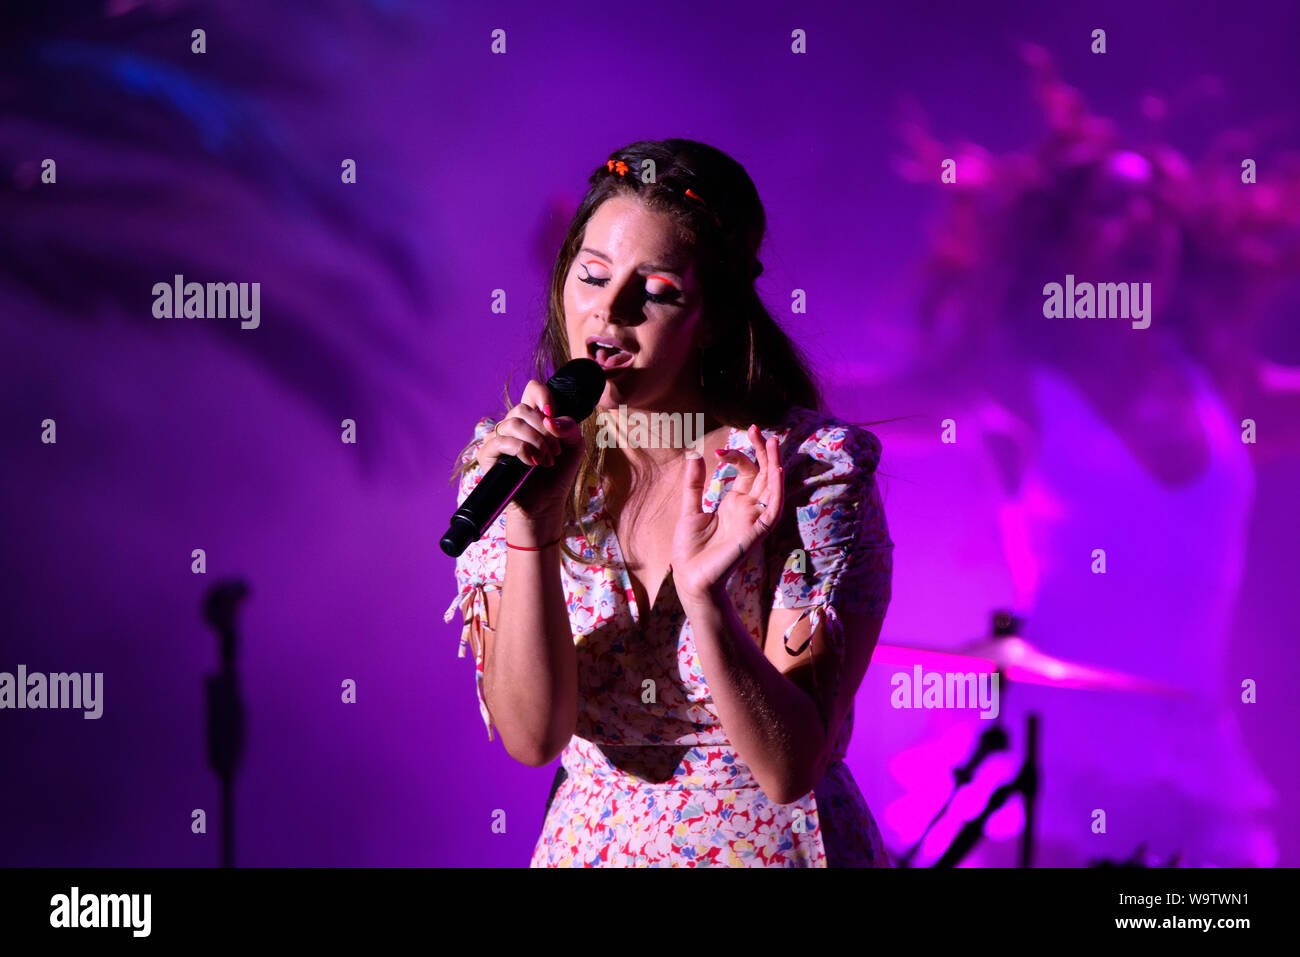 BENICASSIM, SPAIN - JUL 19: Lana del Rey performs in concert at FIB (Festival Internacional de Benicassim) Festival on July 19, 2019 in Benicassim, Sp Stock Photo